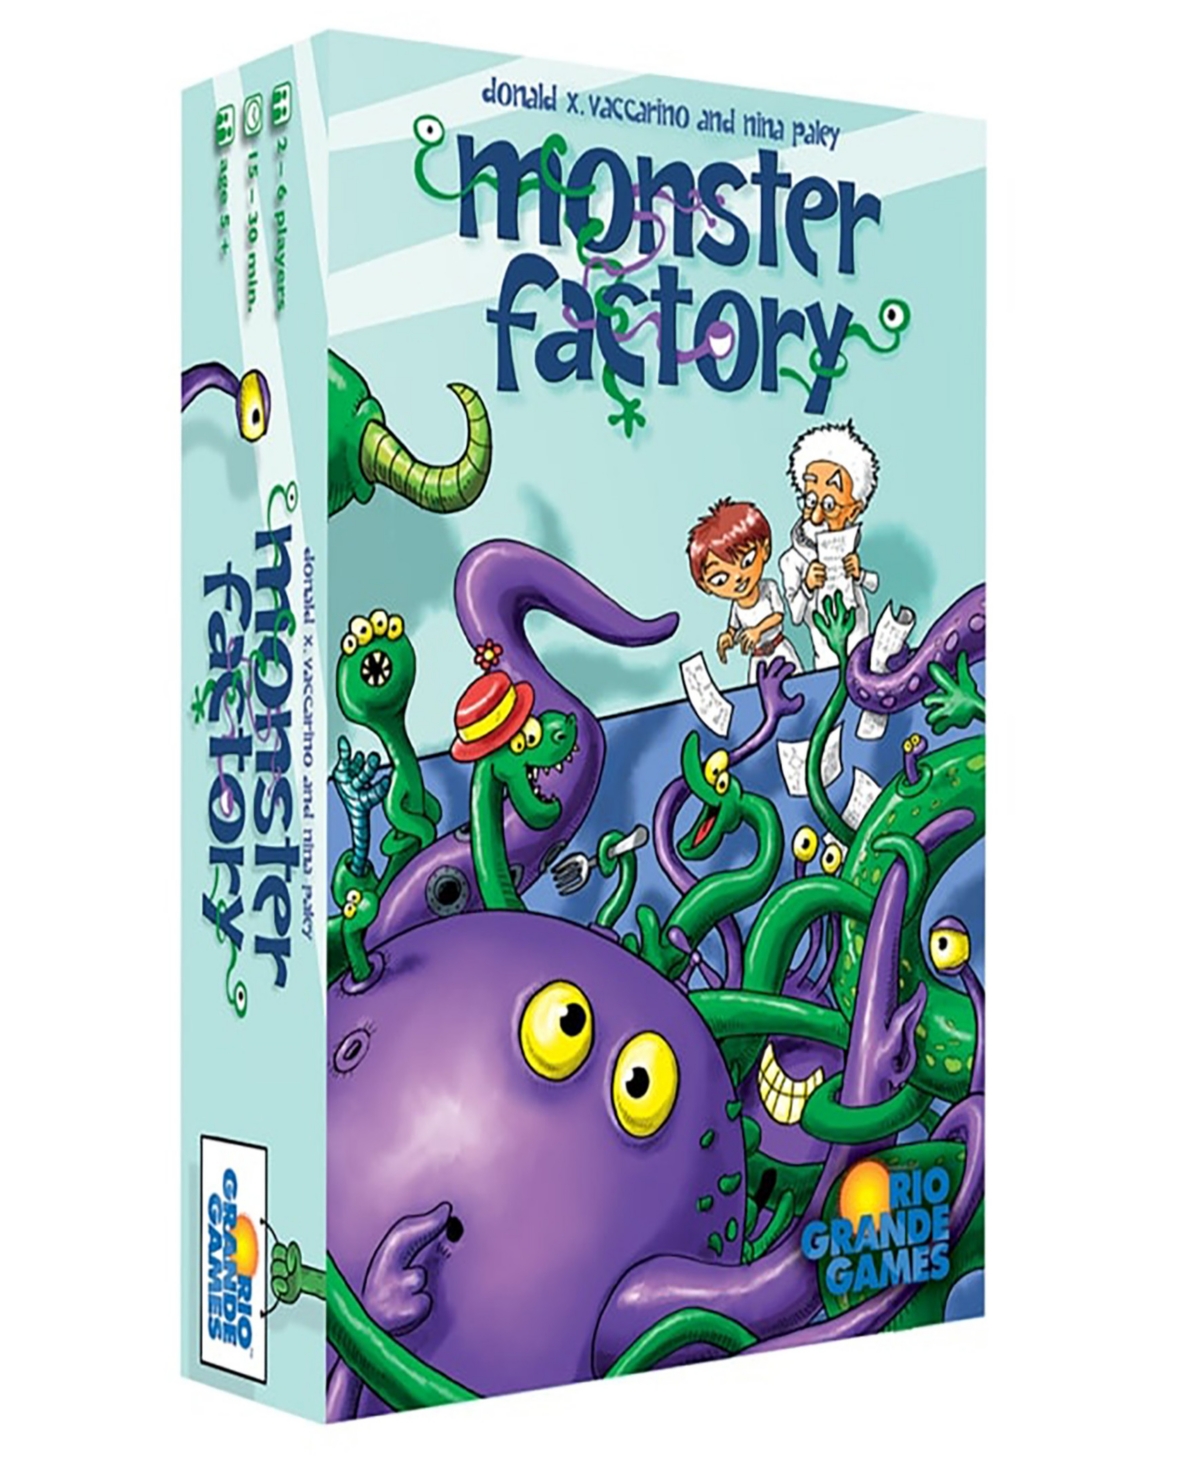 Rio Grande Kids' - Monster Factory Game In Multi